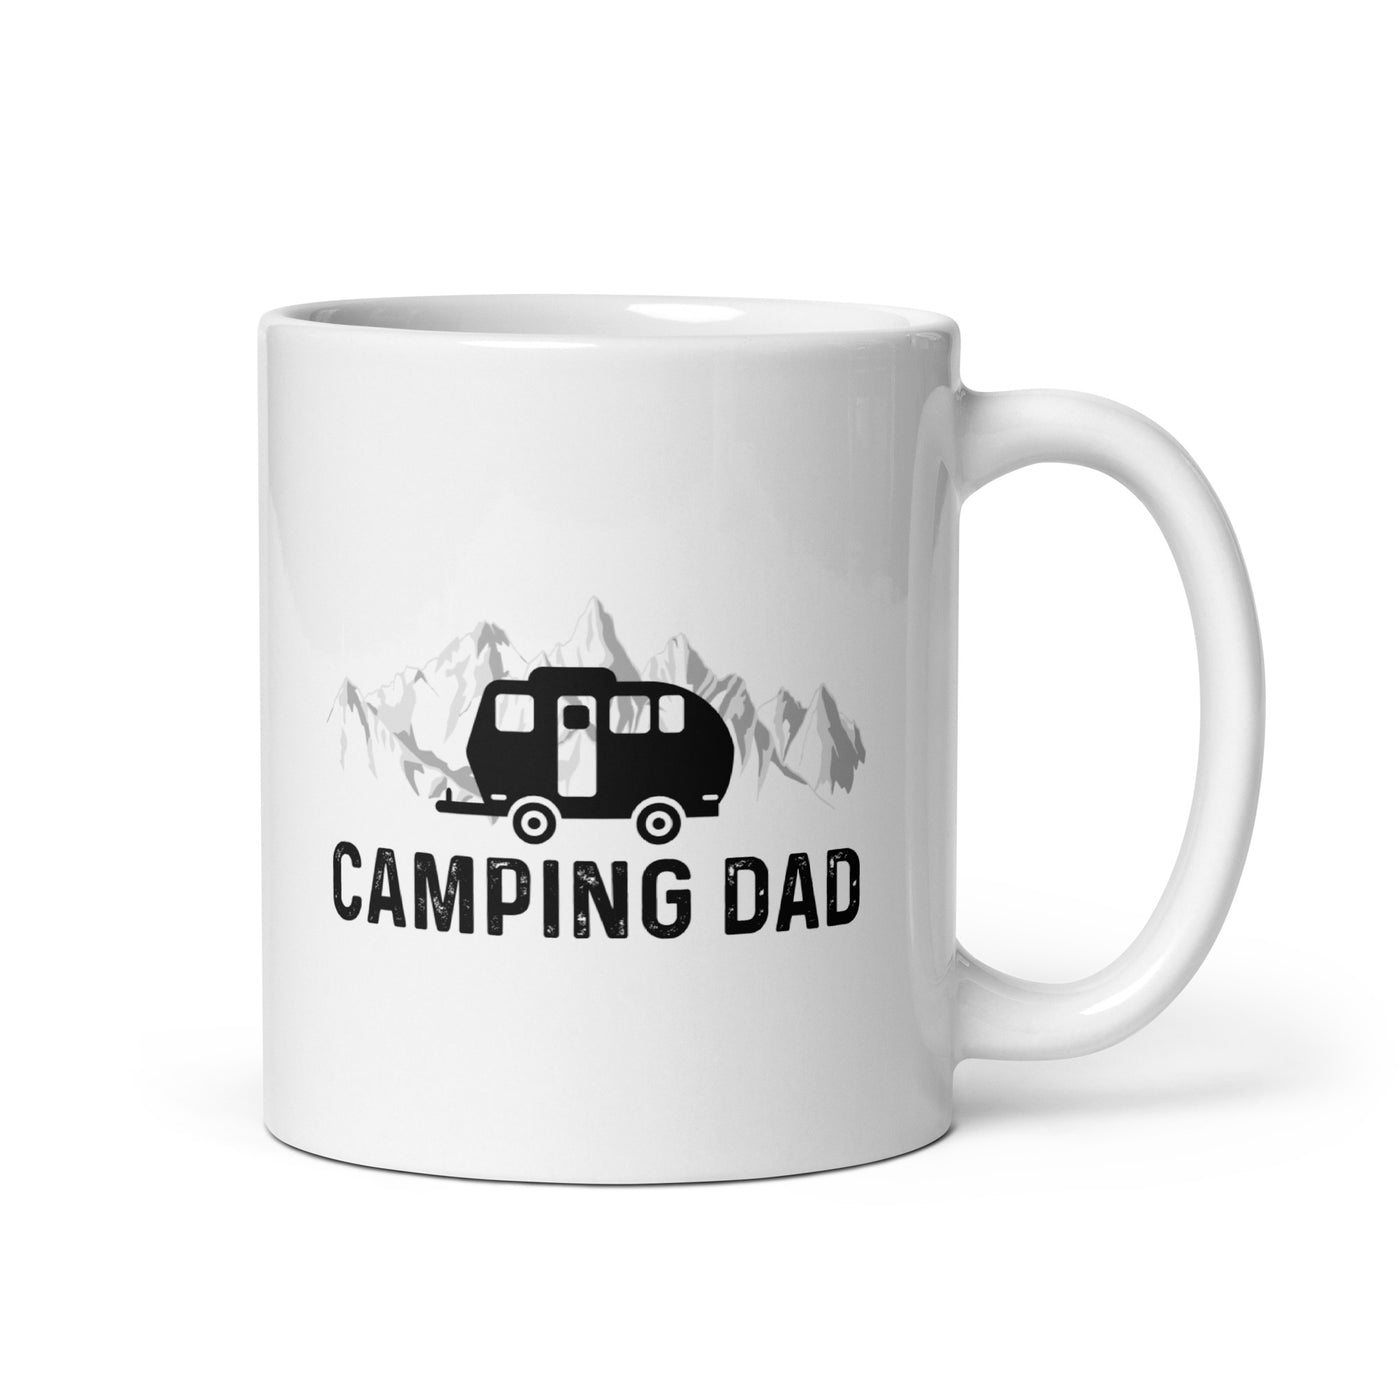 Camping Dad 1 - Tasse camping